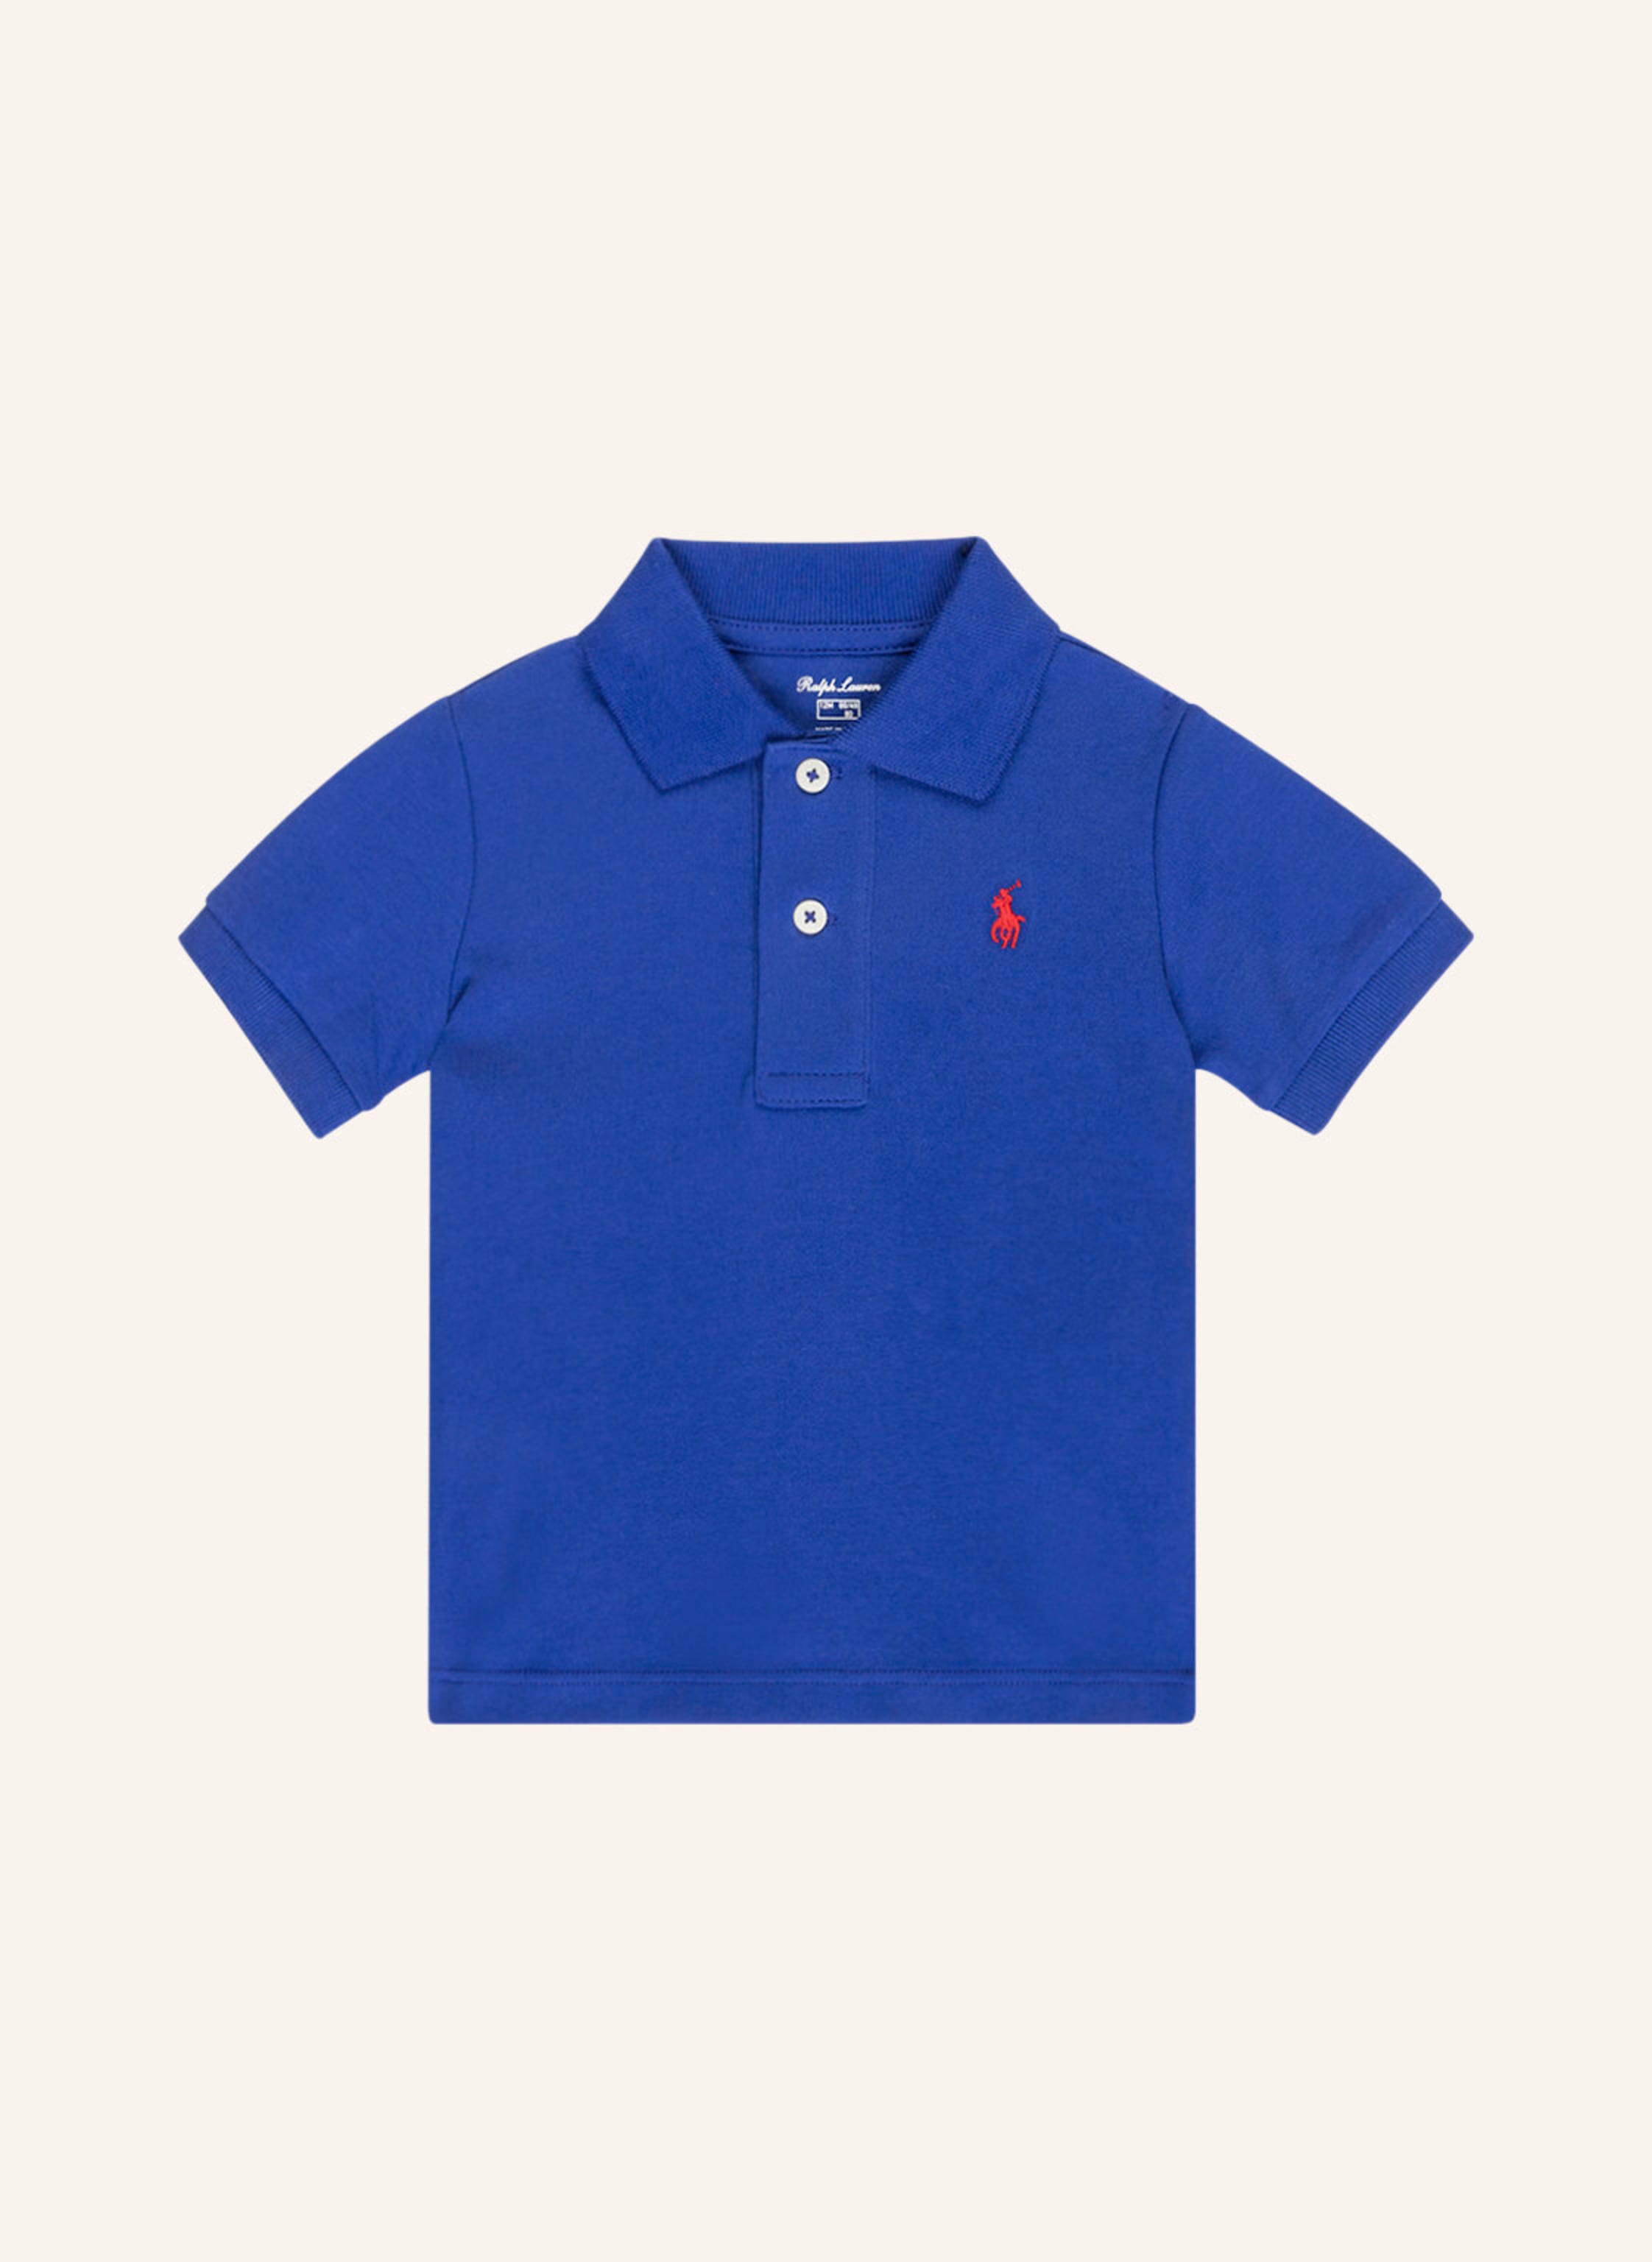 Jersey-Poloshirt blau Breuninger Herren Kleidung Tops & Shirts Shirts Poloshirts 